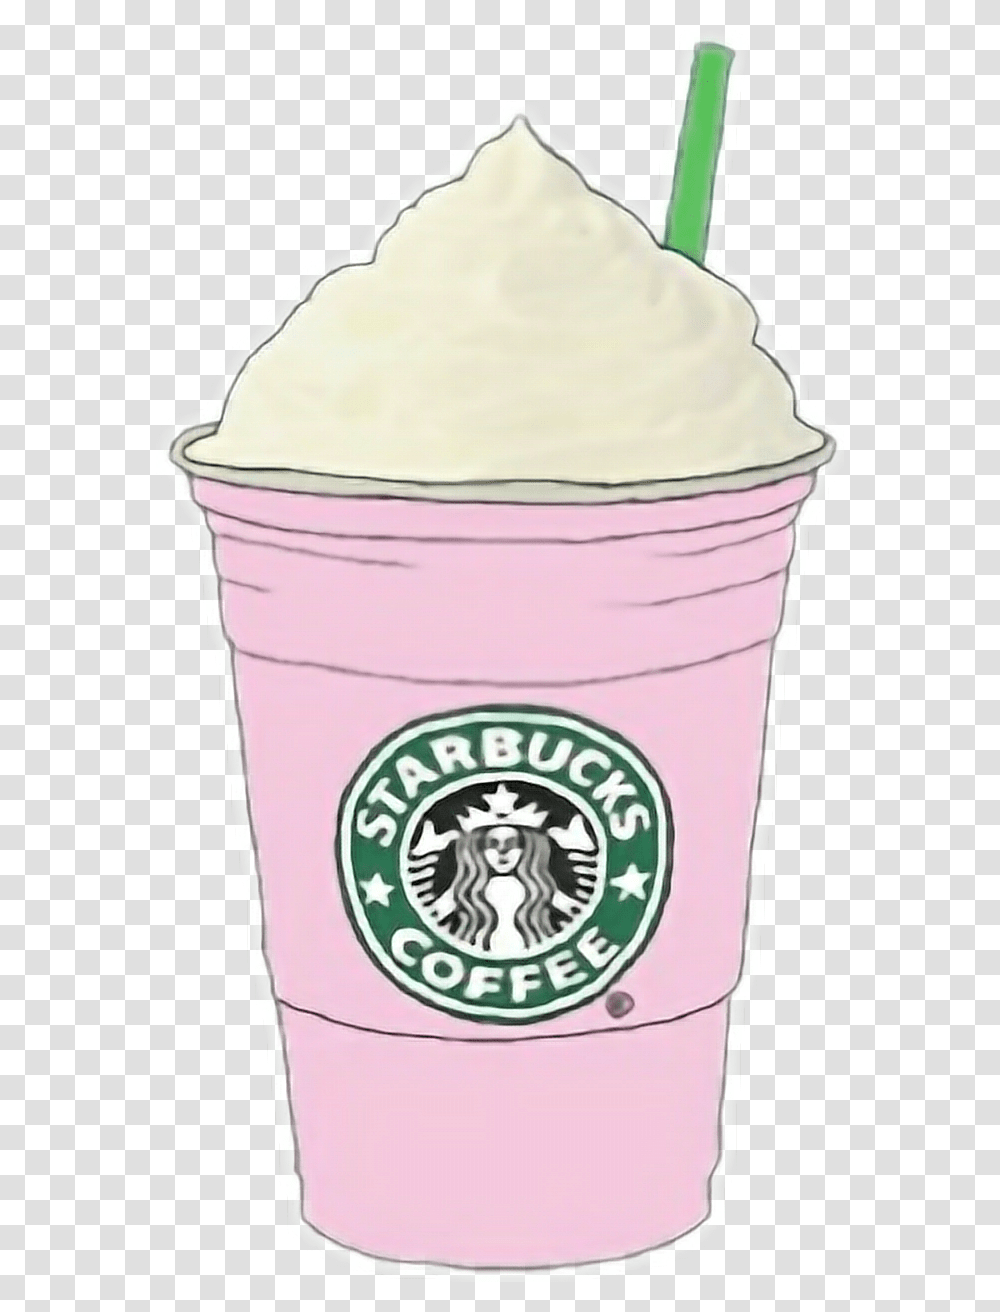 Starbucks Coffee Cafe Rosa Pink Tumblr Starbucks Cotton Candy Frappuccino, Cream, Dessert, Food, Creme Transparent Png